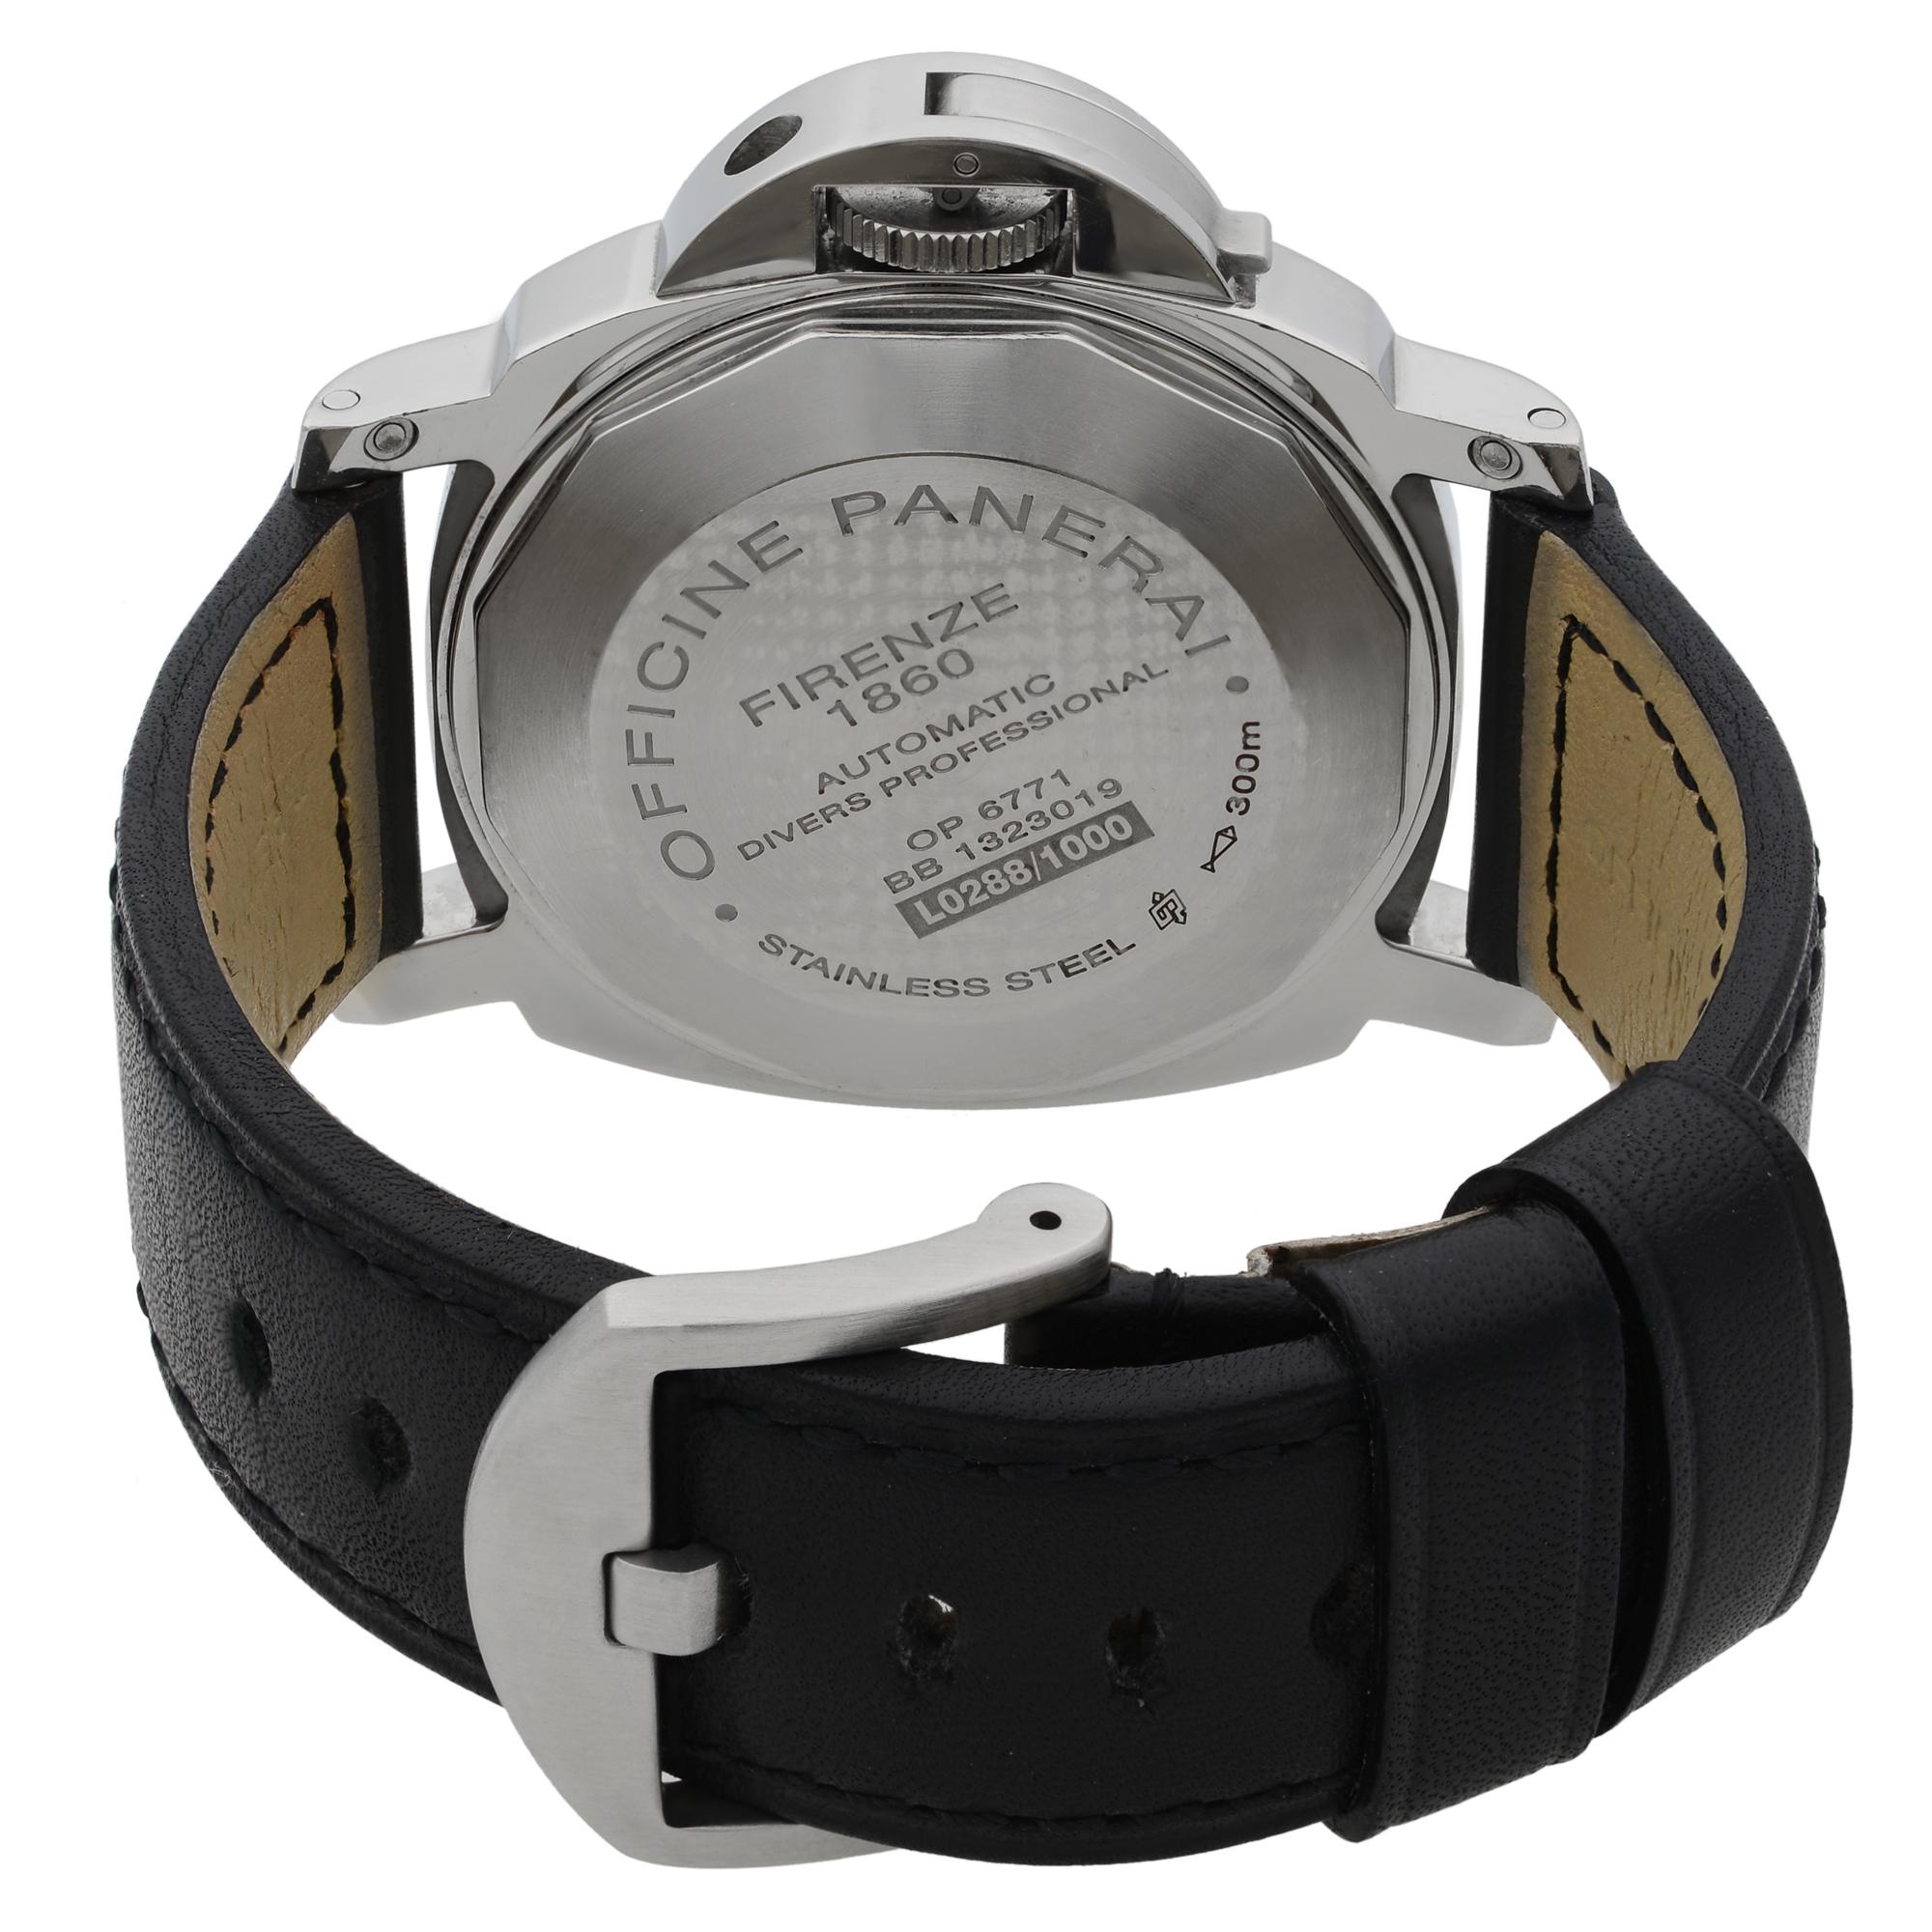 Panerai Luminor Submersible Steel Black Dial Automatic Men's Watch PAM00024 2